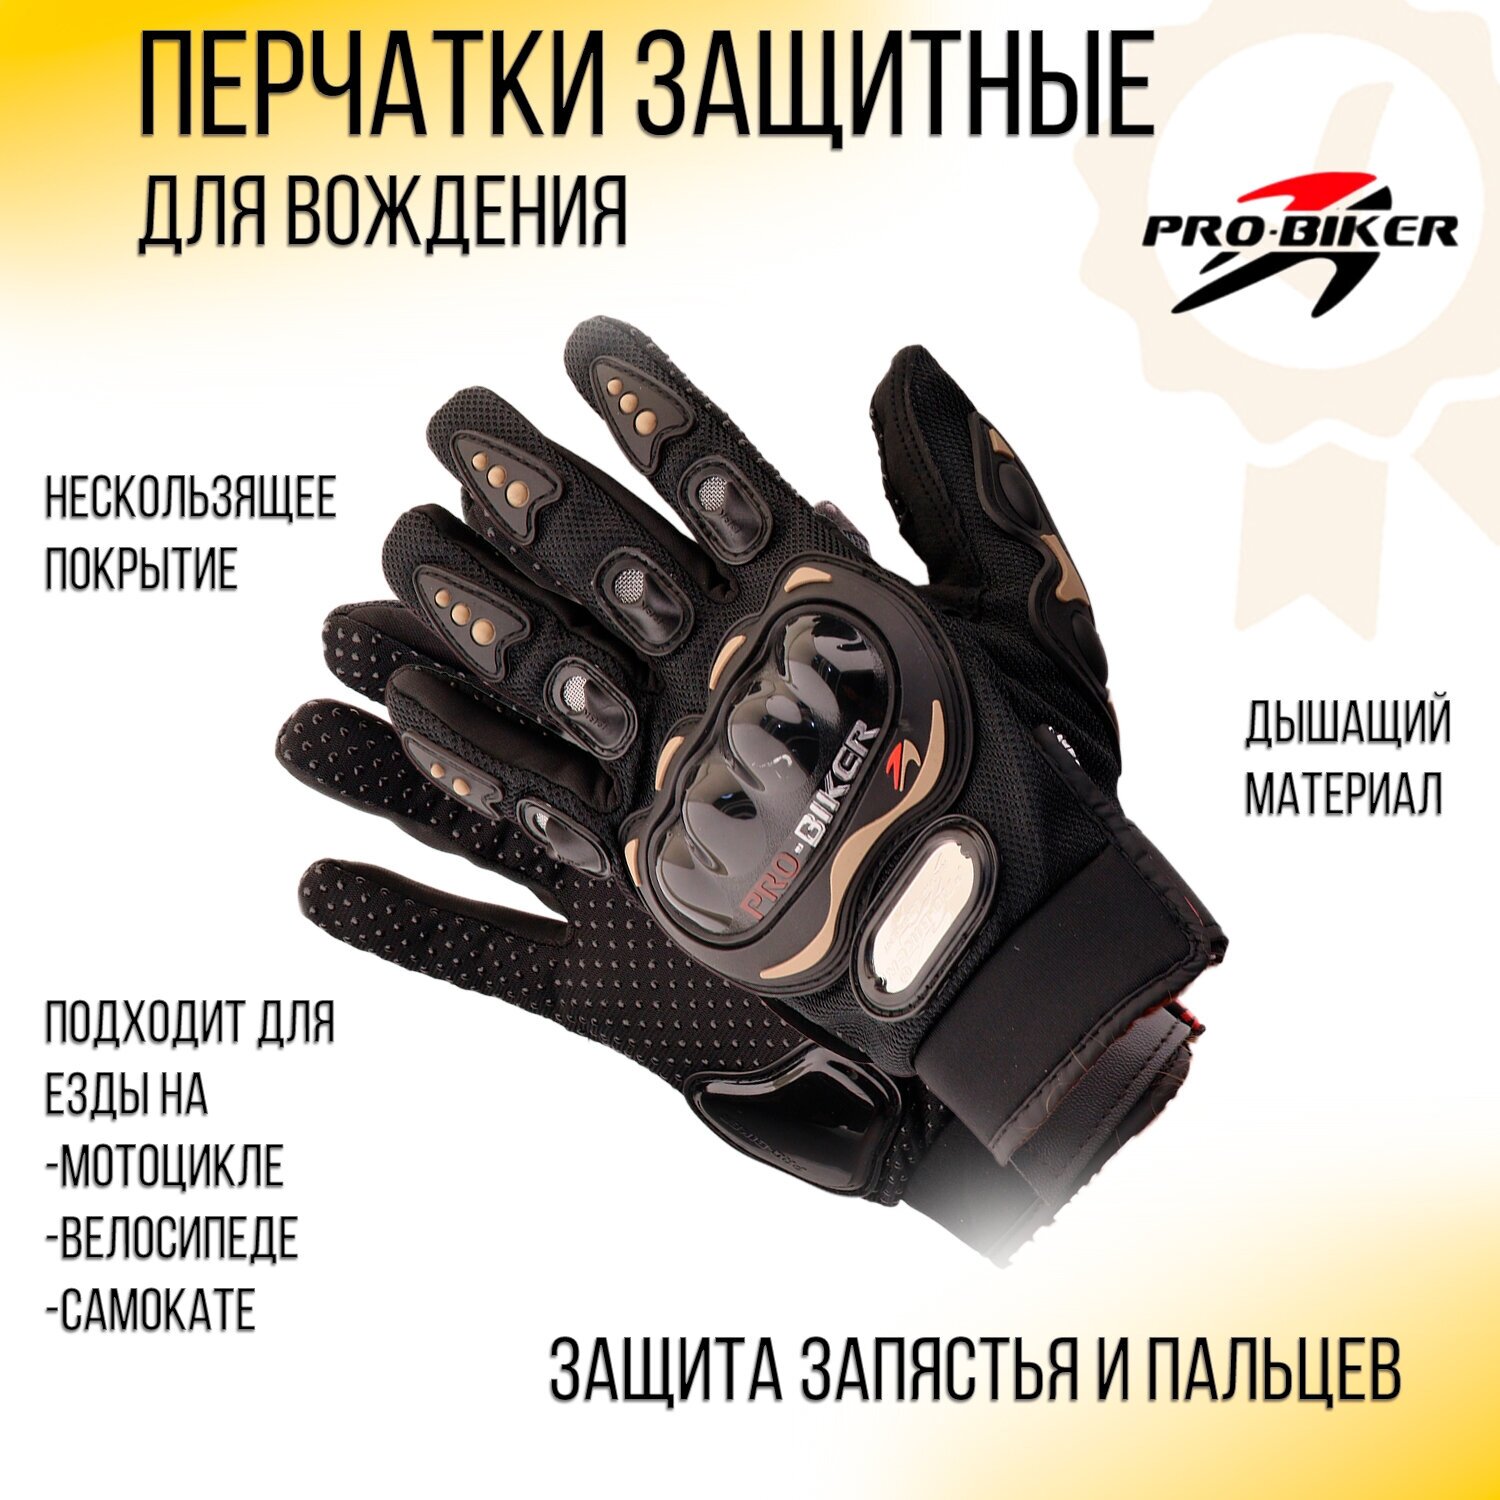 Мото перчатки "PRO-BIKER" (mod: RQ-01, size: XL, черные)